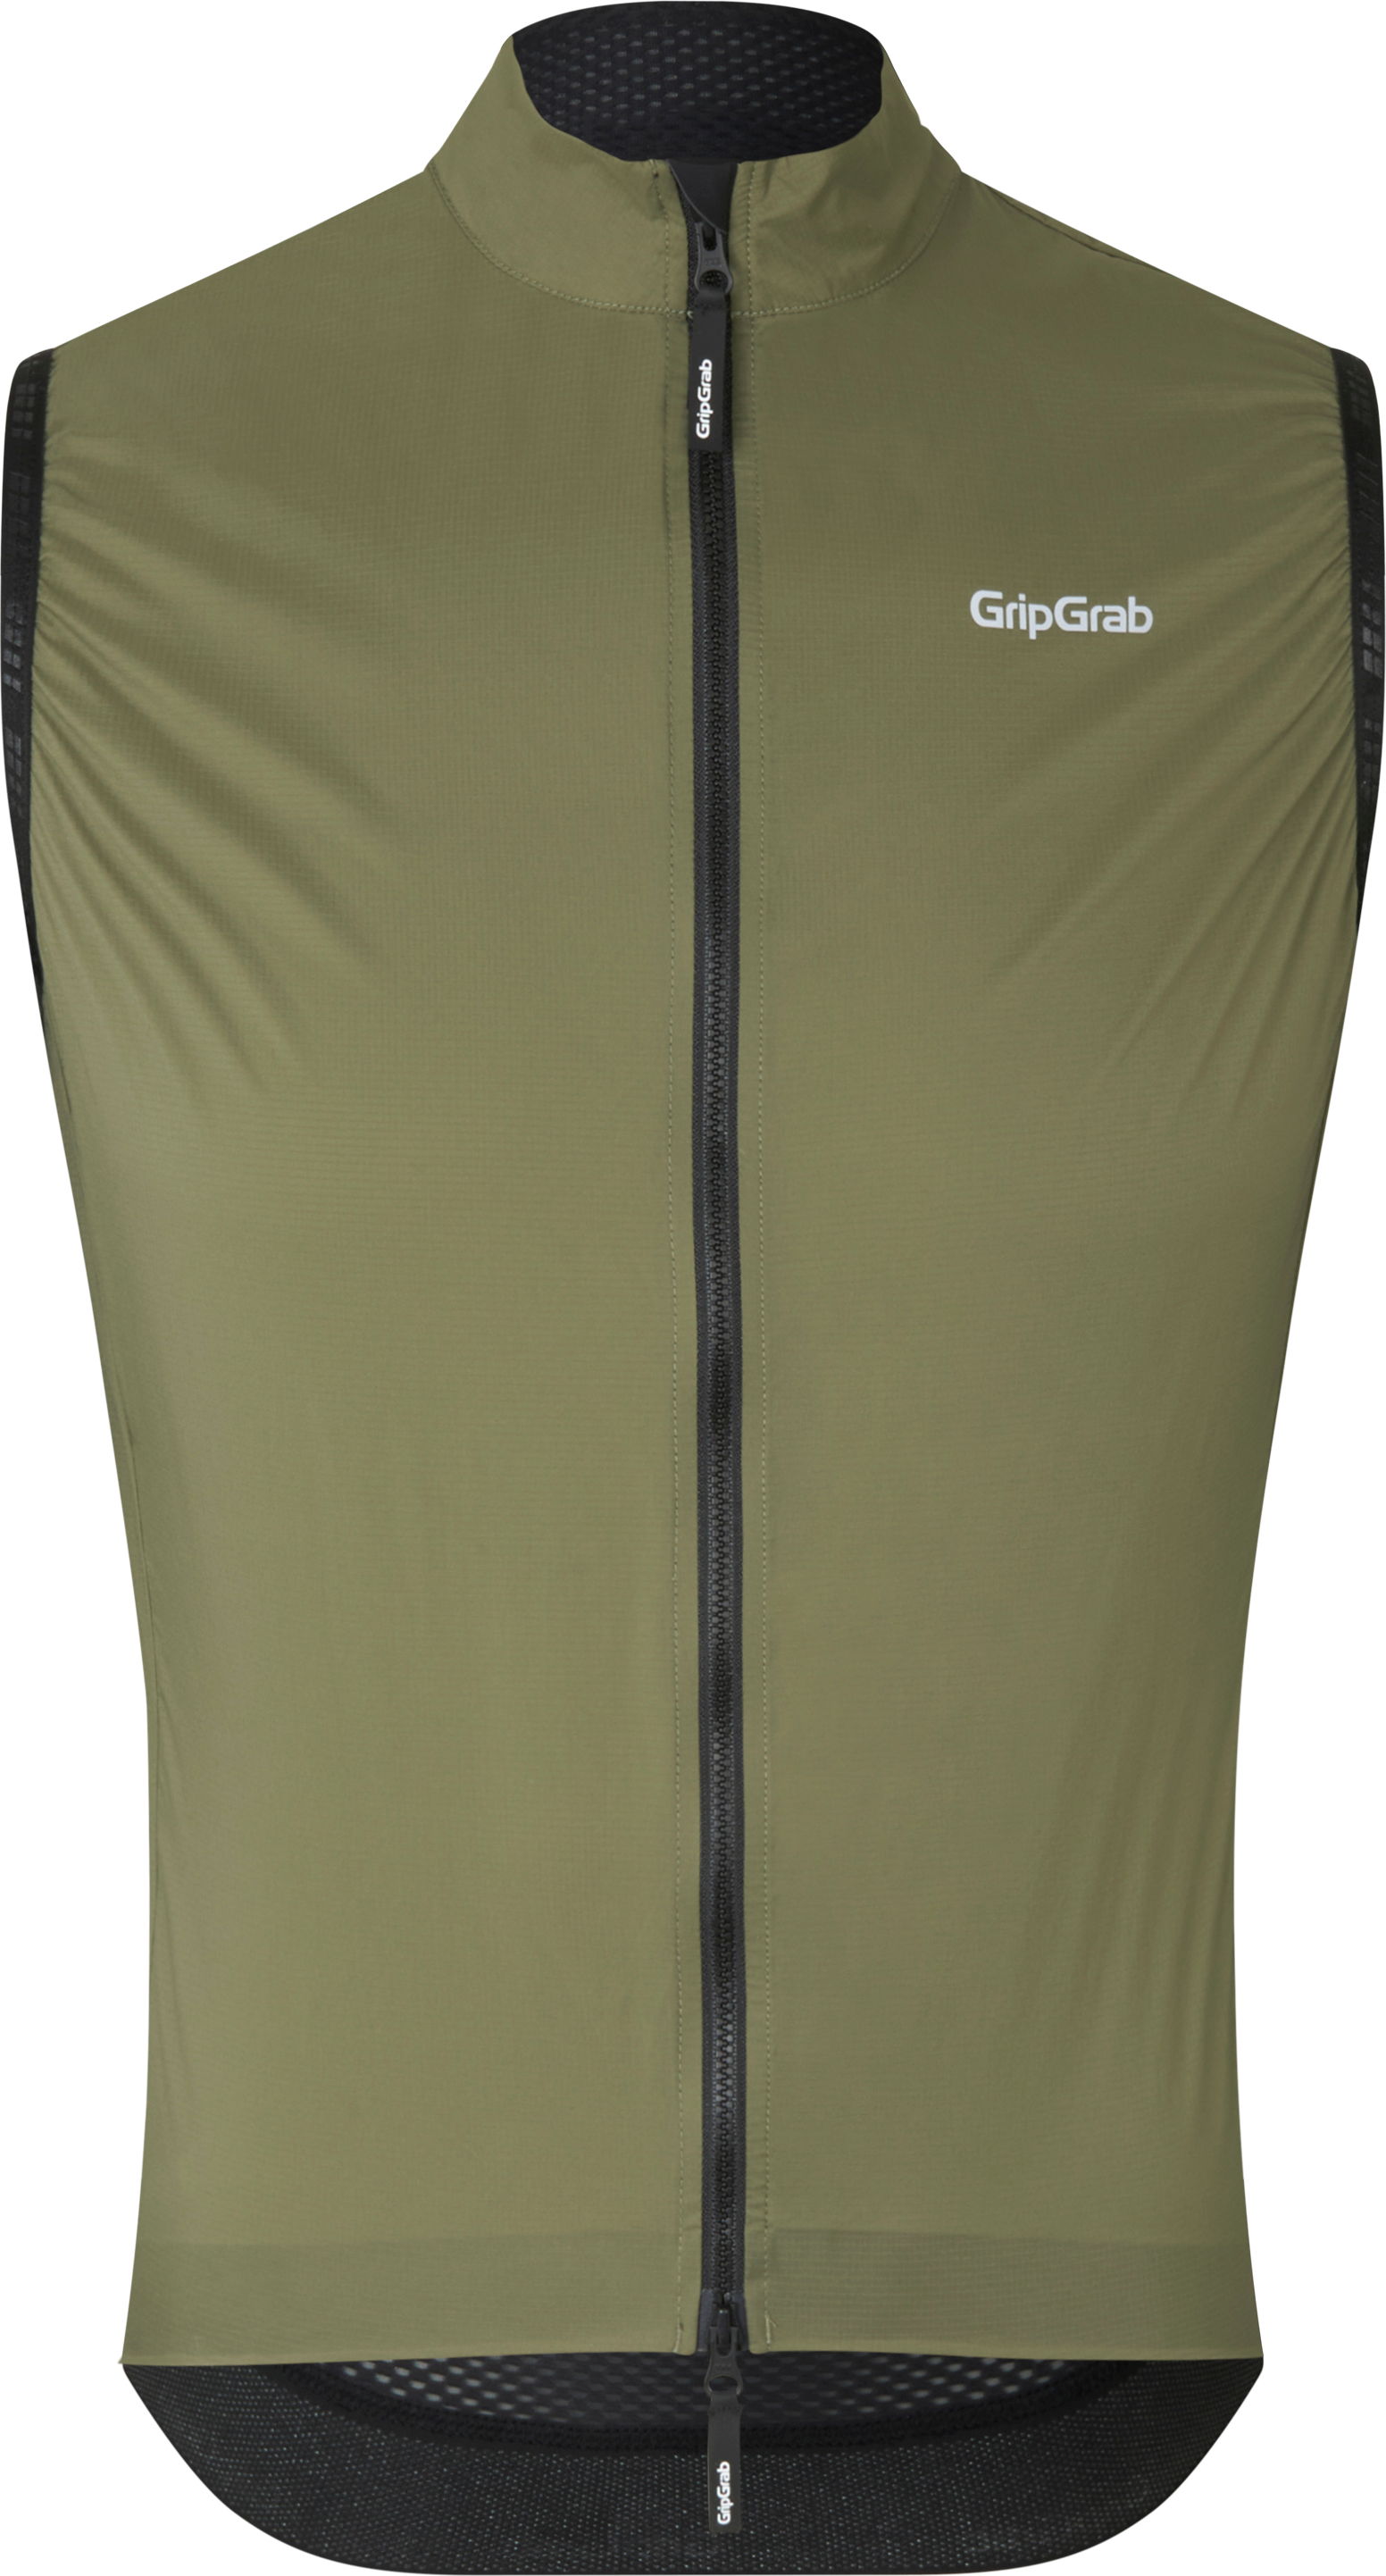 Gripgrab Men's WindBuster Windproof Lightweight Vest Olive Green XL, Olive Green